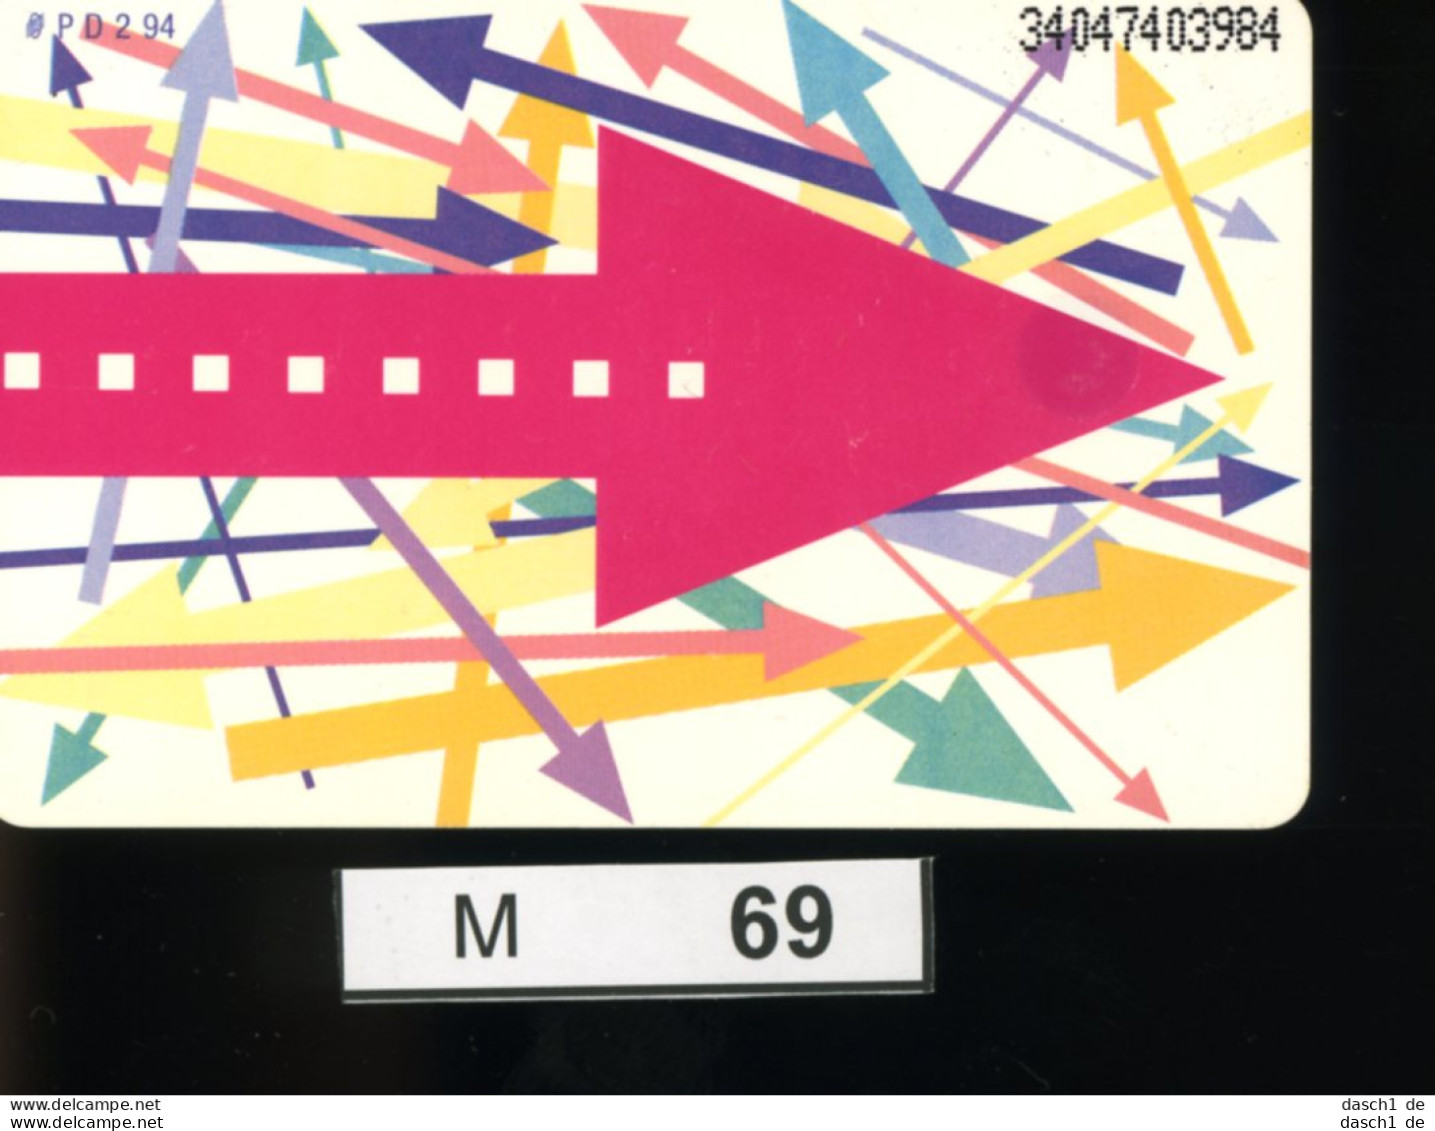 M069, Deutschland, TK, Standardkarte Telekom, 12 DM, 1994 - P & PD-Series: Schalterkarten Der Dt. Telekom